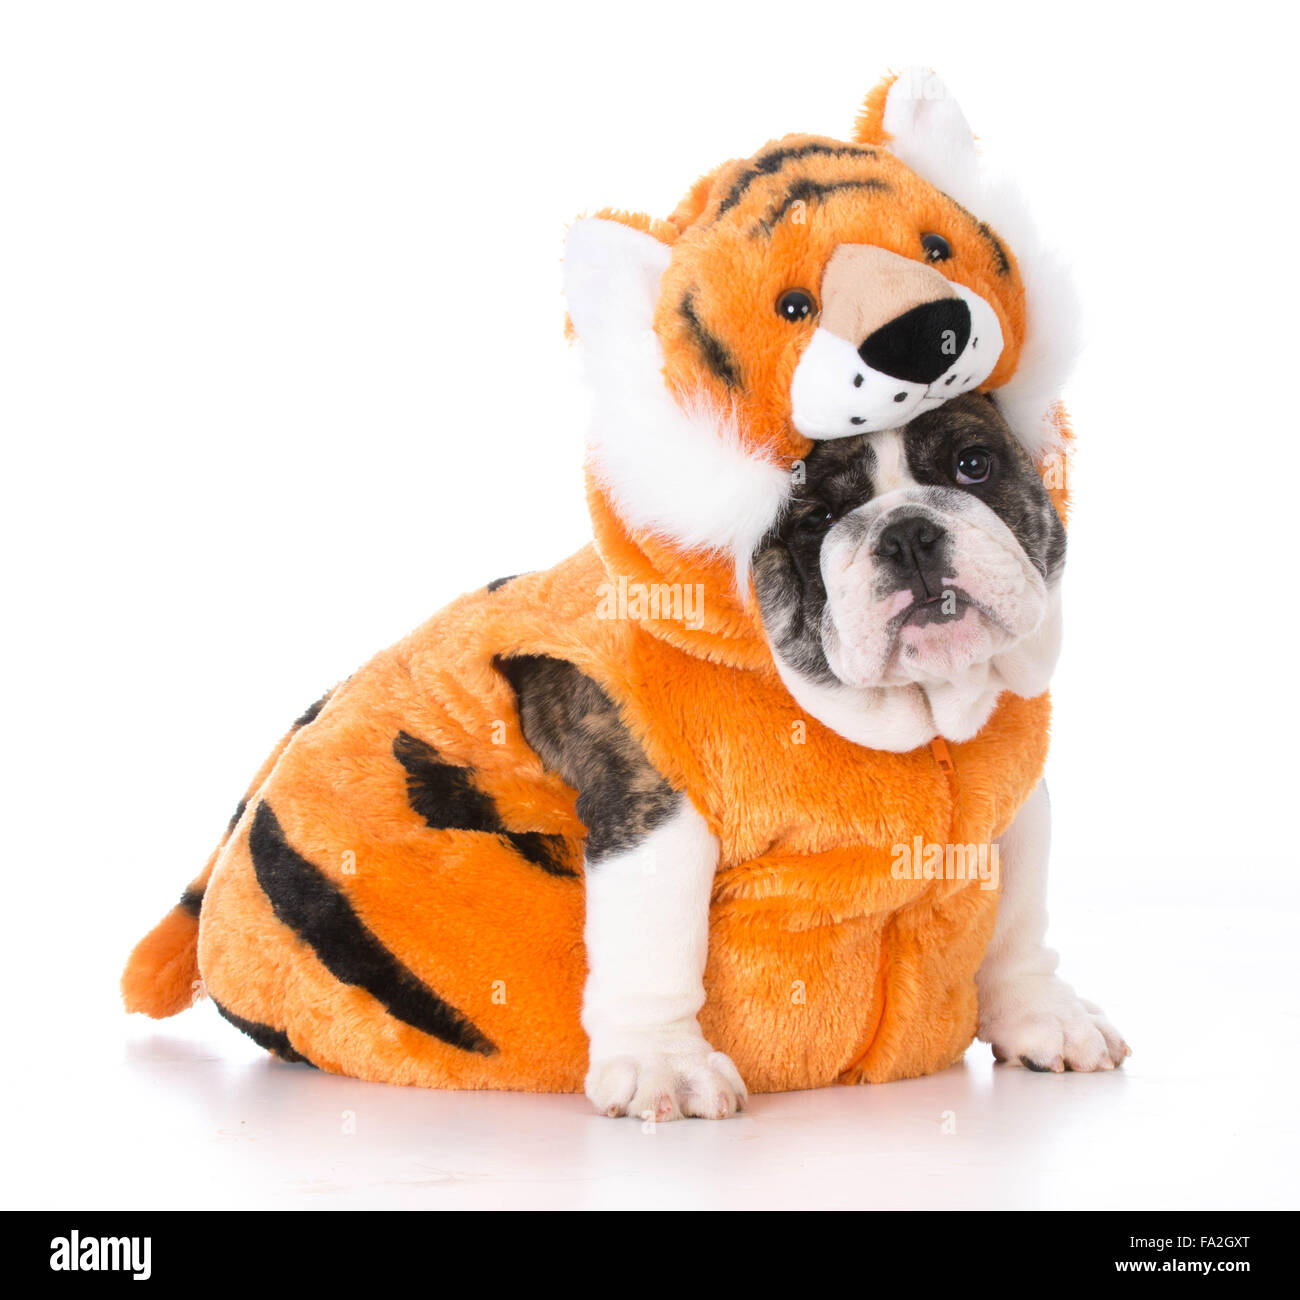 bulldog puppy wearing tiger costume on white background Stock Photo - Alamy